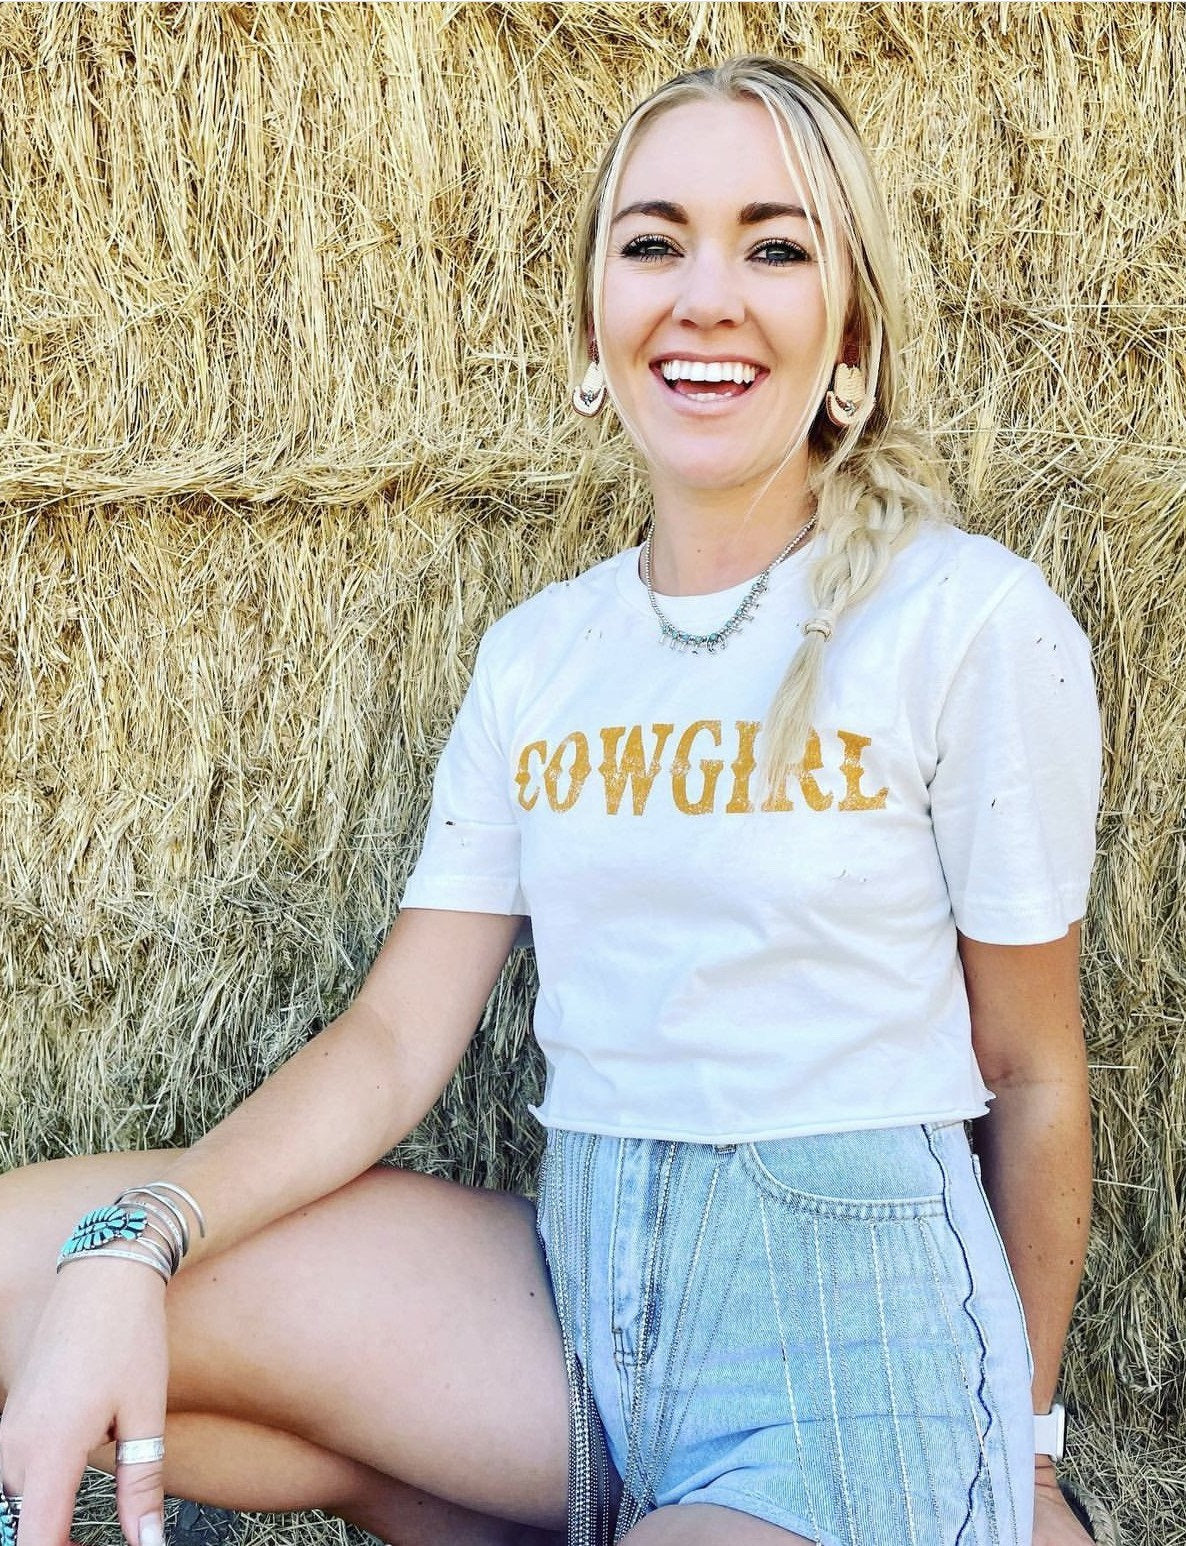 Cowgirl Short Sleeve T-Shirt